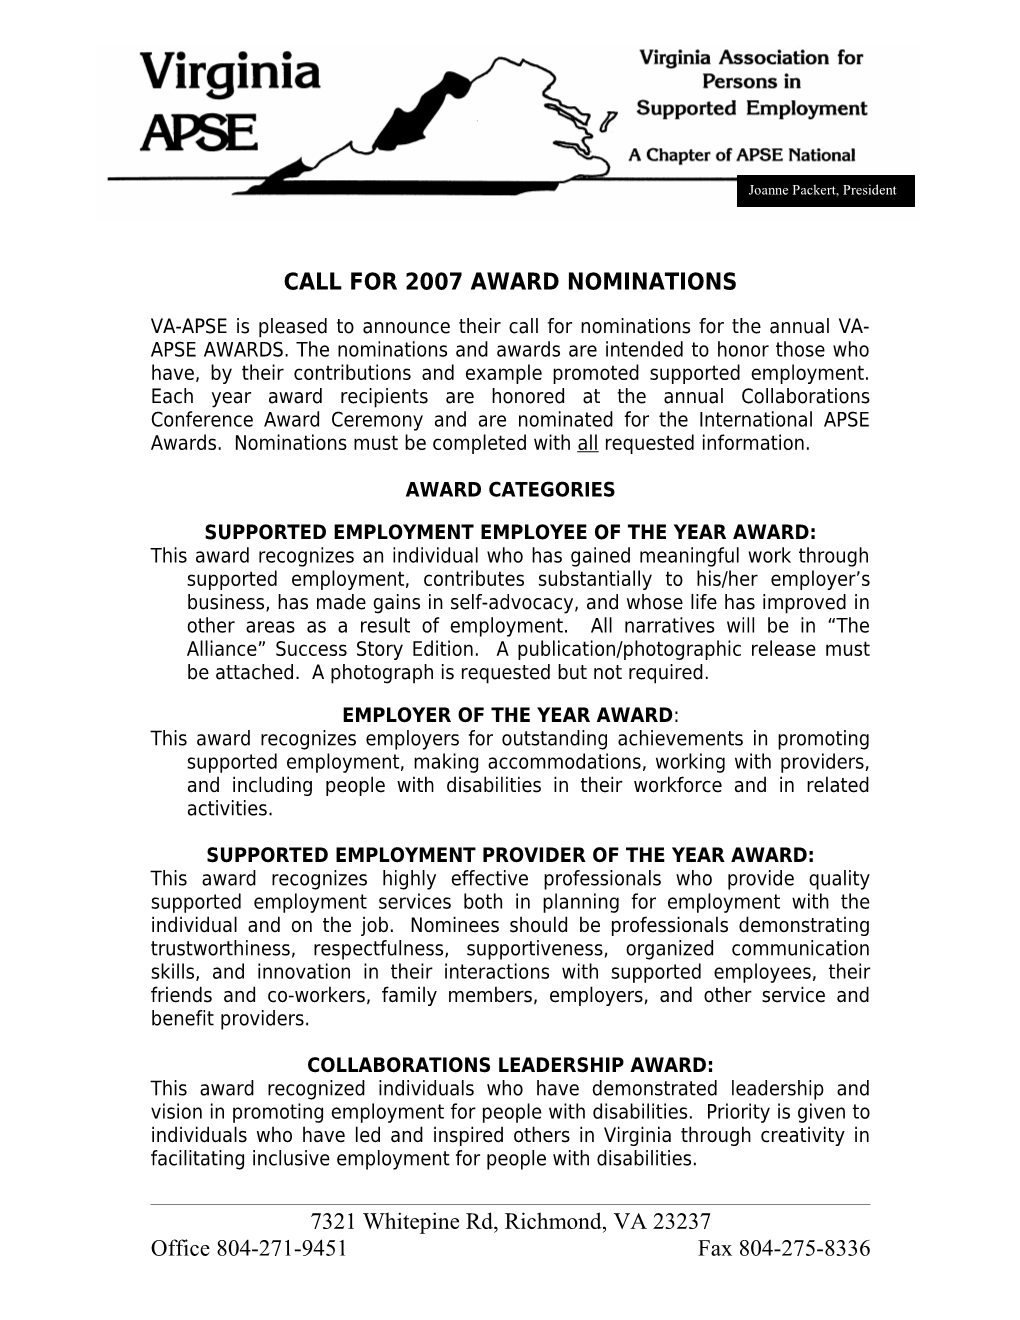 Call for 2007 Award Nominations